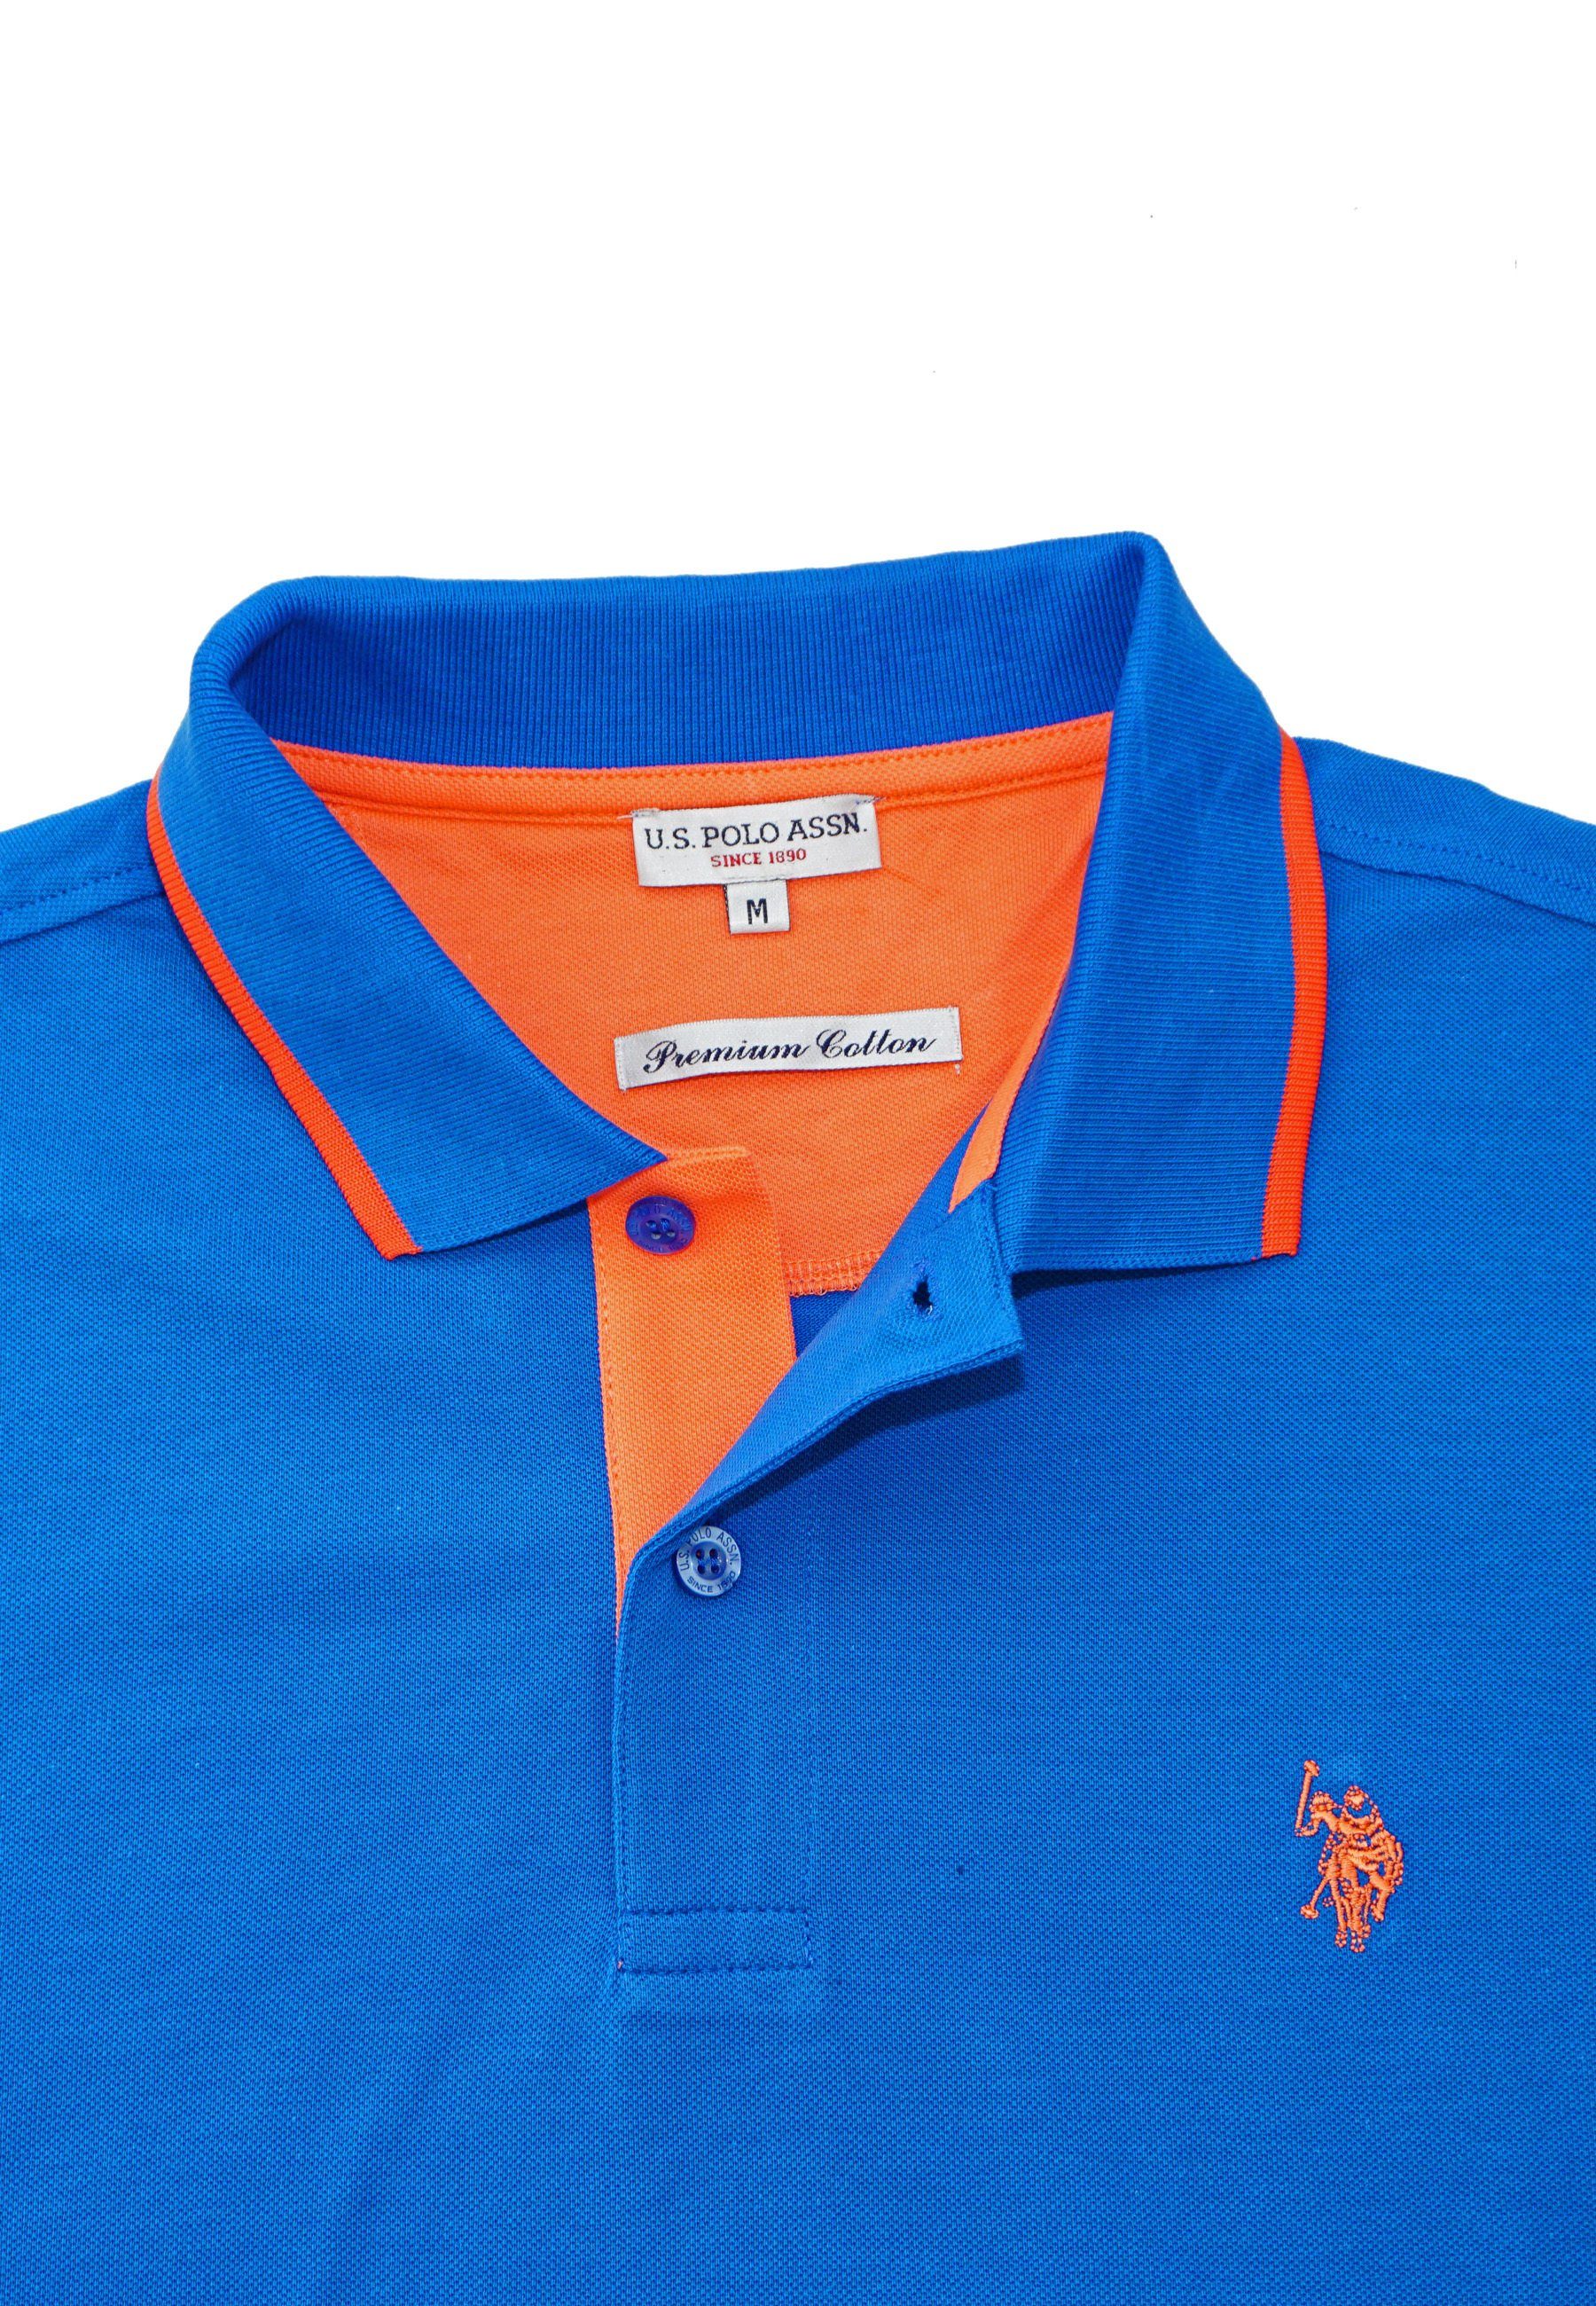 (1-tlg) Poloshirt Polo U.S. Shirt Poloshirt Assn blau